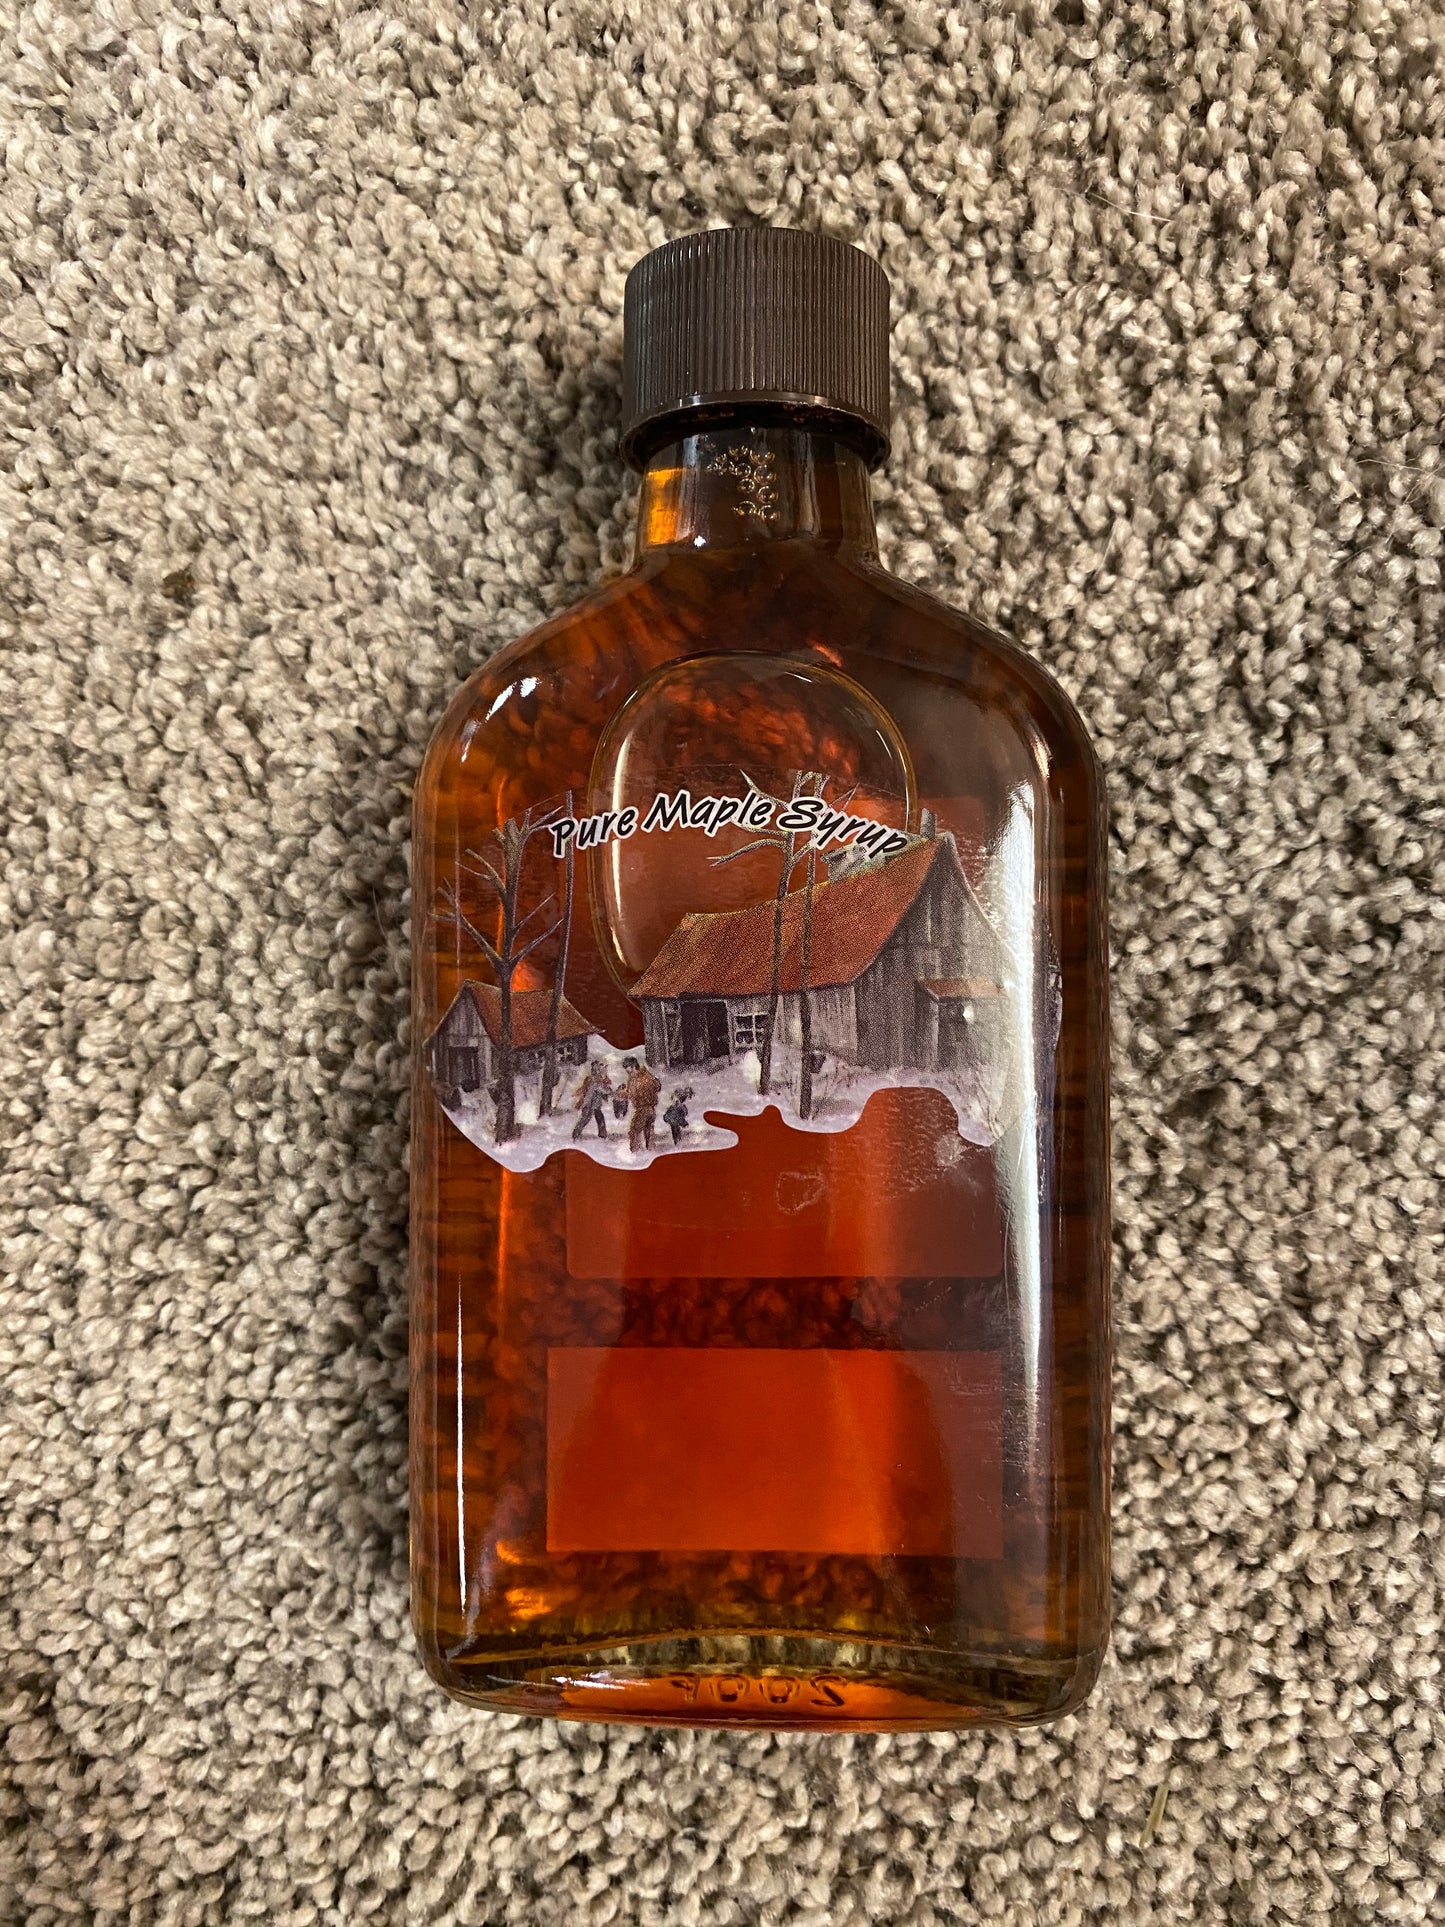 Pennsylvania Maple Syrup  (Butler Family Maple)